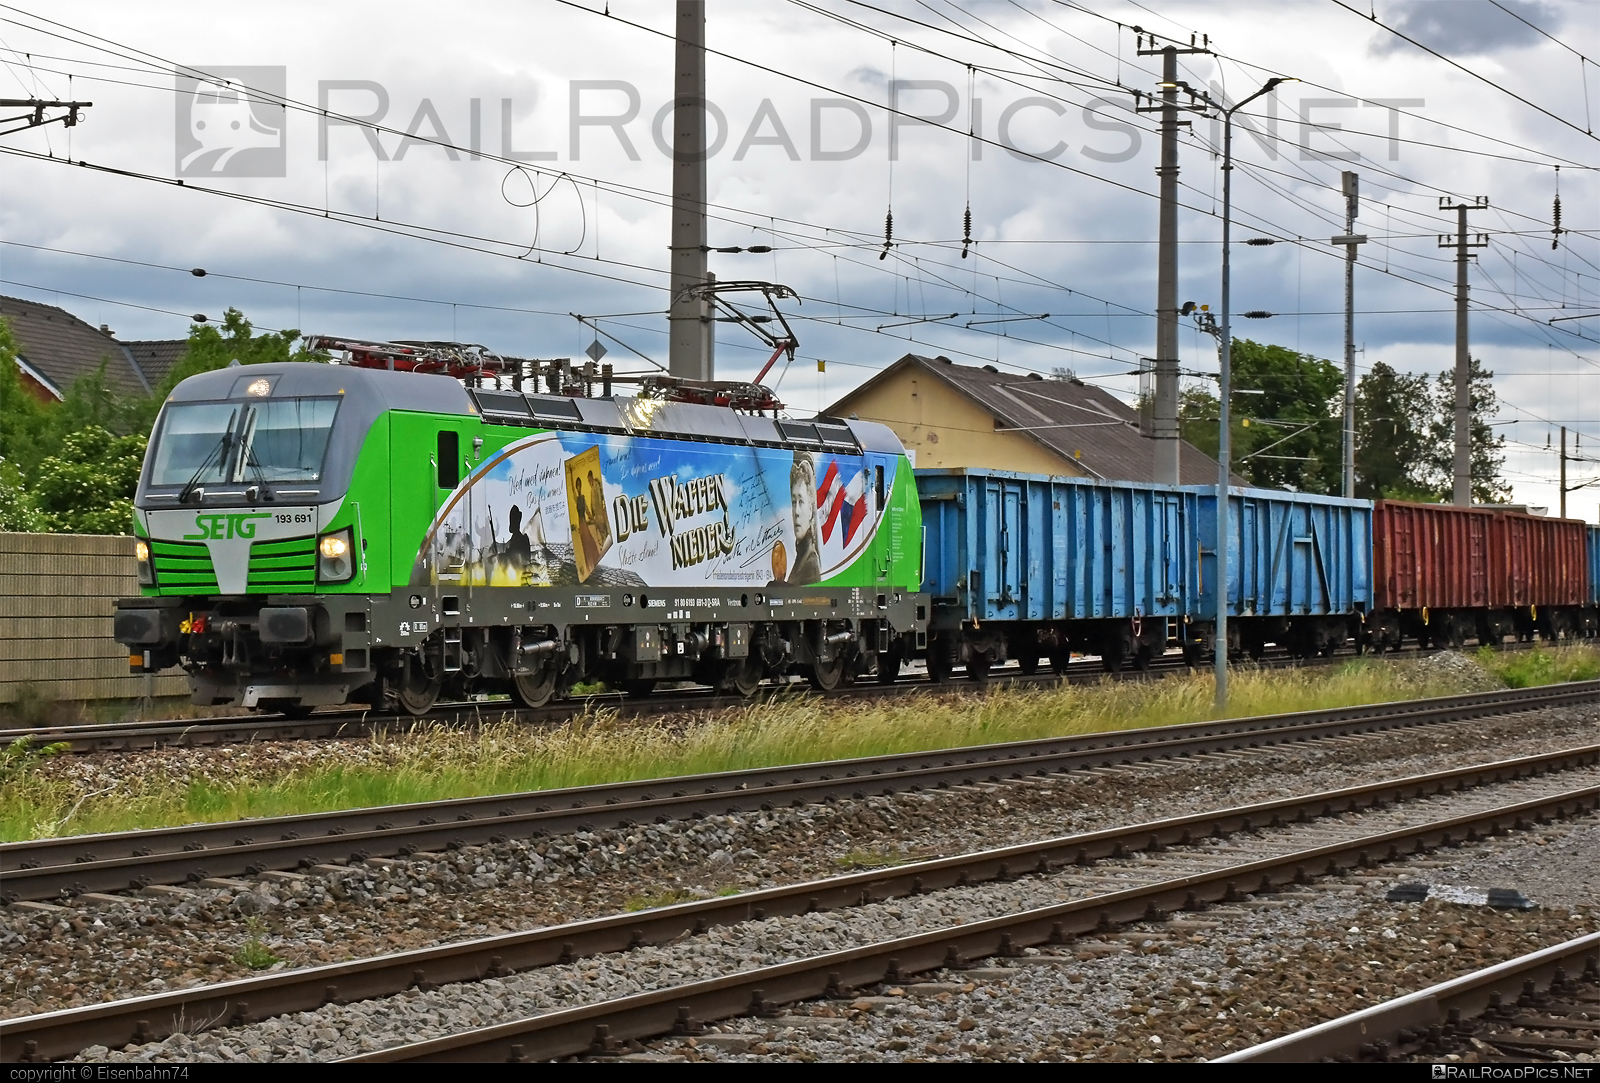 Siemens Vectron MS - 193 691 operated by Salzburger Eisenbahn Transportlogistik GmbH #SalzburgerEisenbahnTransportlogistik #SalzburgerEisenbahnTransportlogistikGmbH #openwagon #s-rail #sRailGmbH #setg #siemens #siemensVectron #siemensVectronMS #vectron #vectronMS